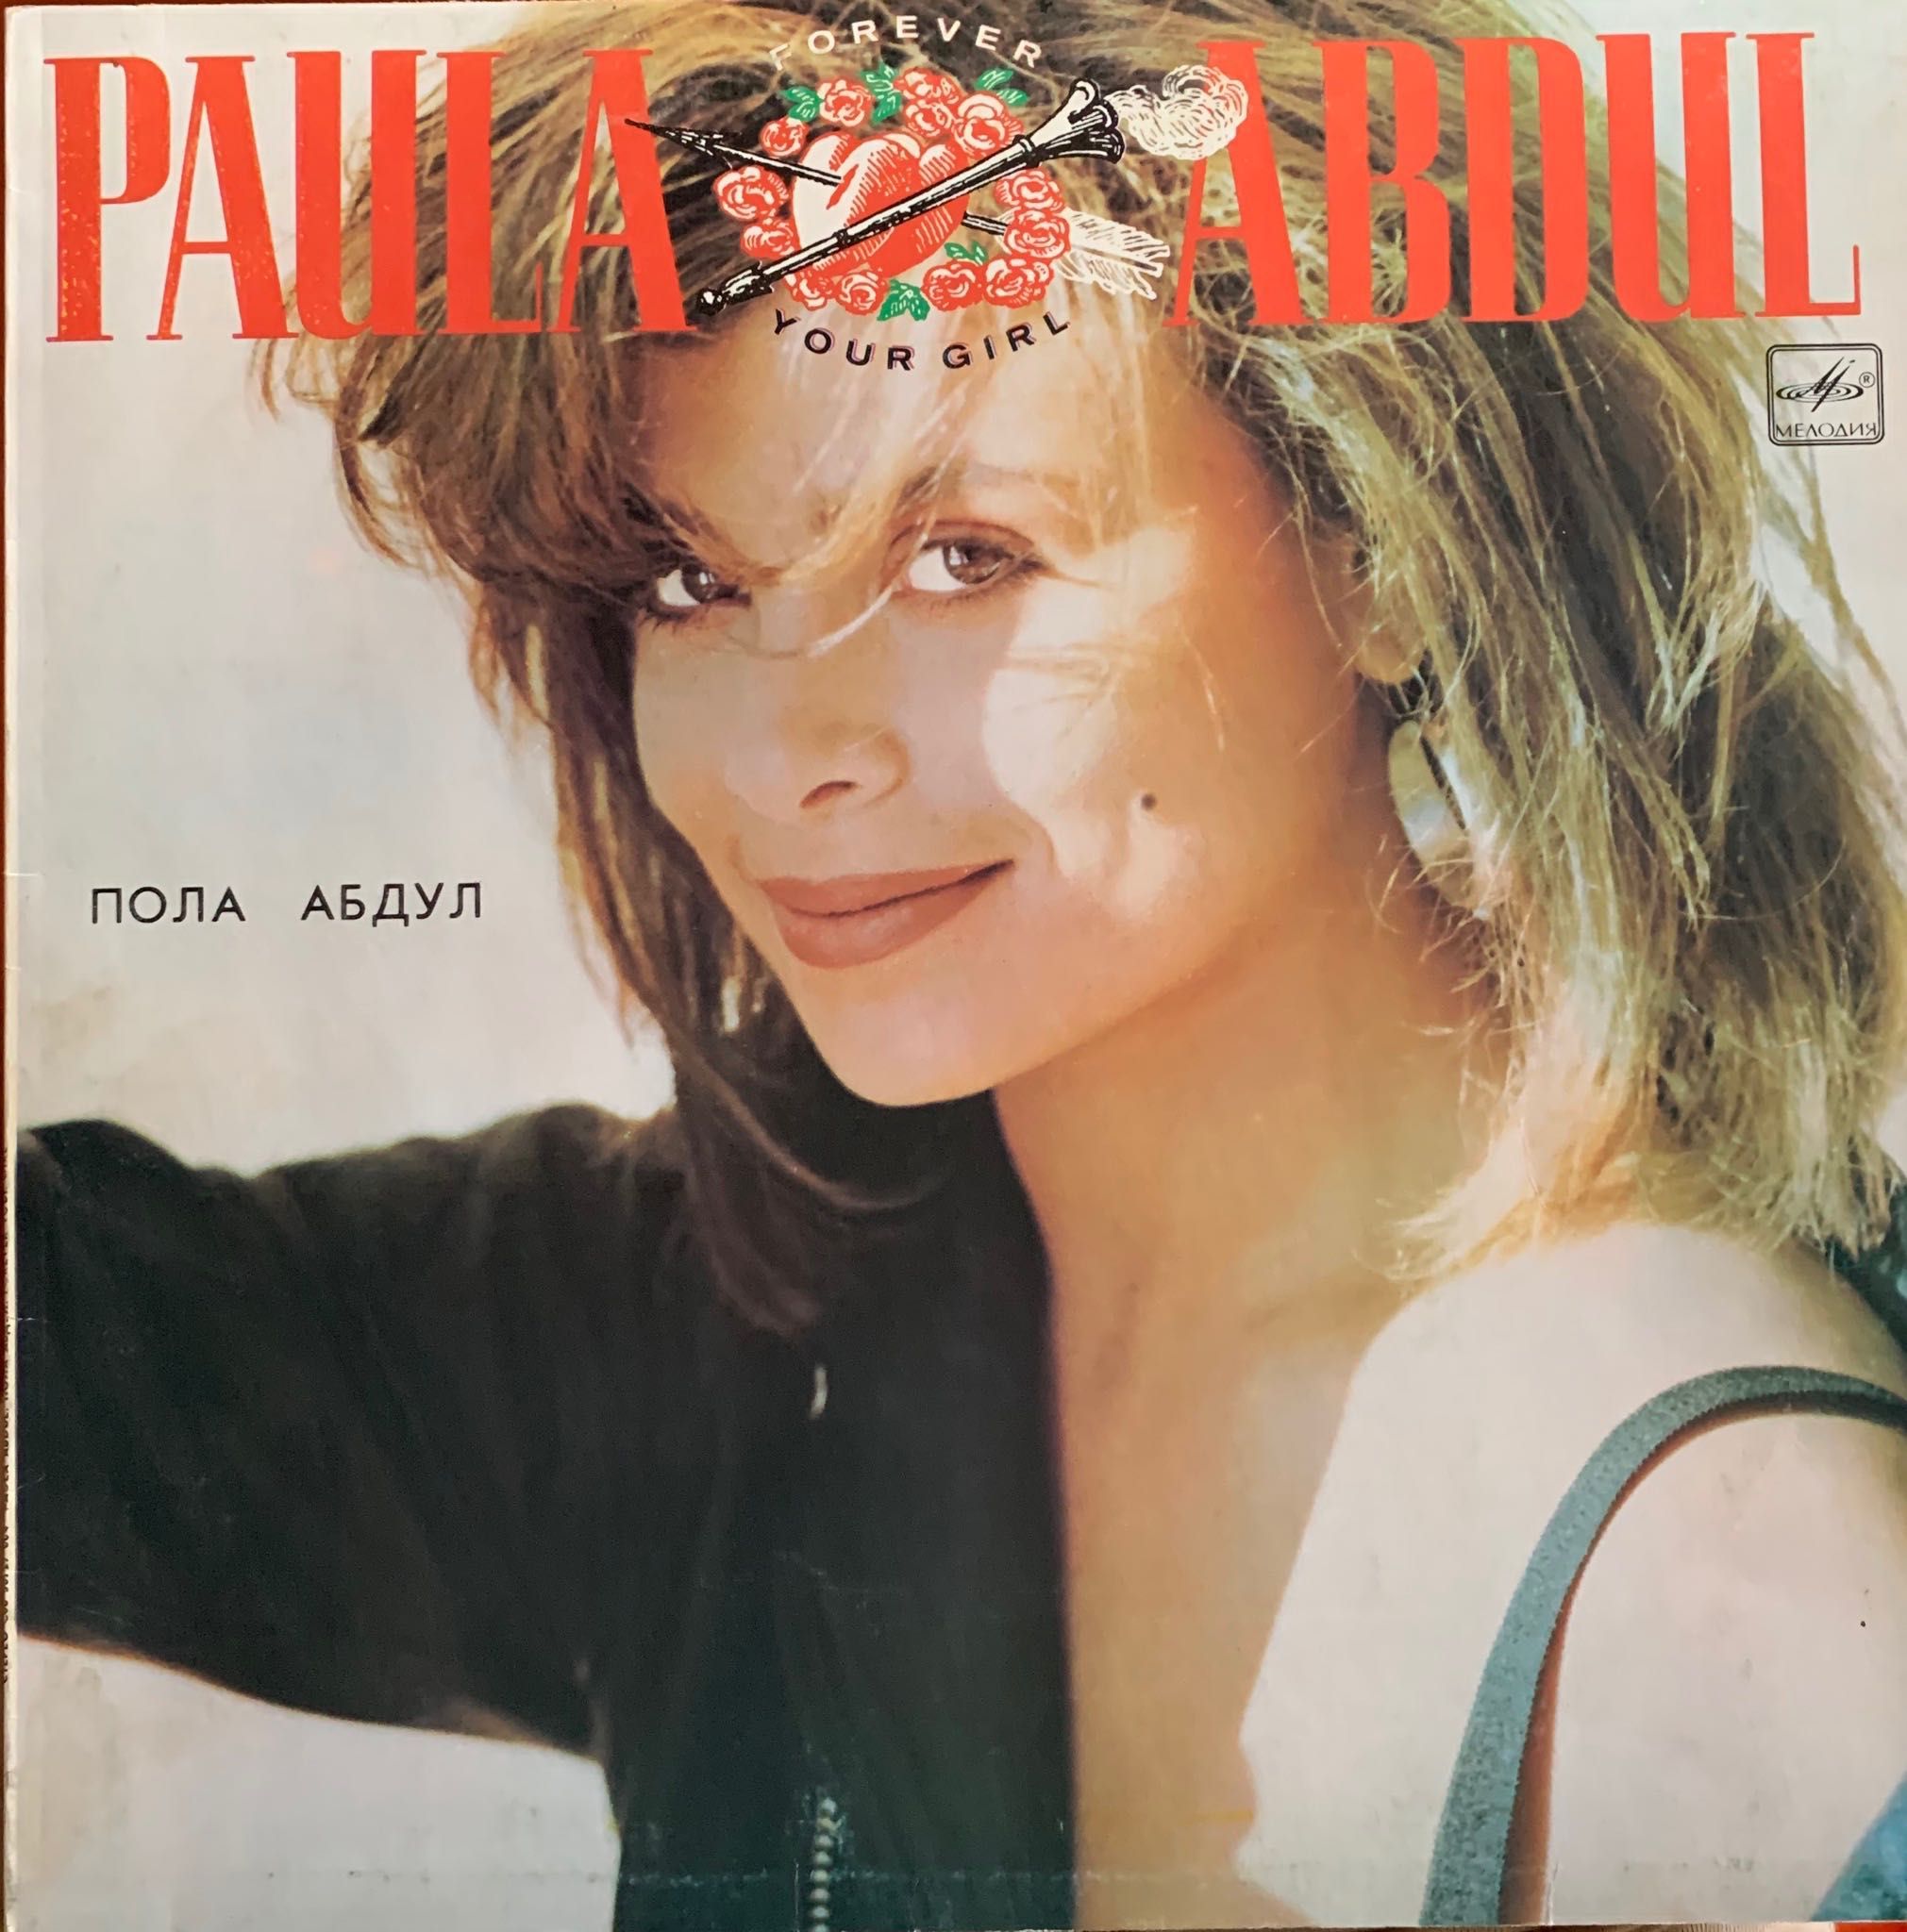 Платівка. Paula Abdul. “Your girl” 1988